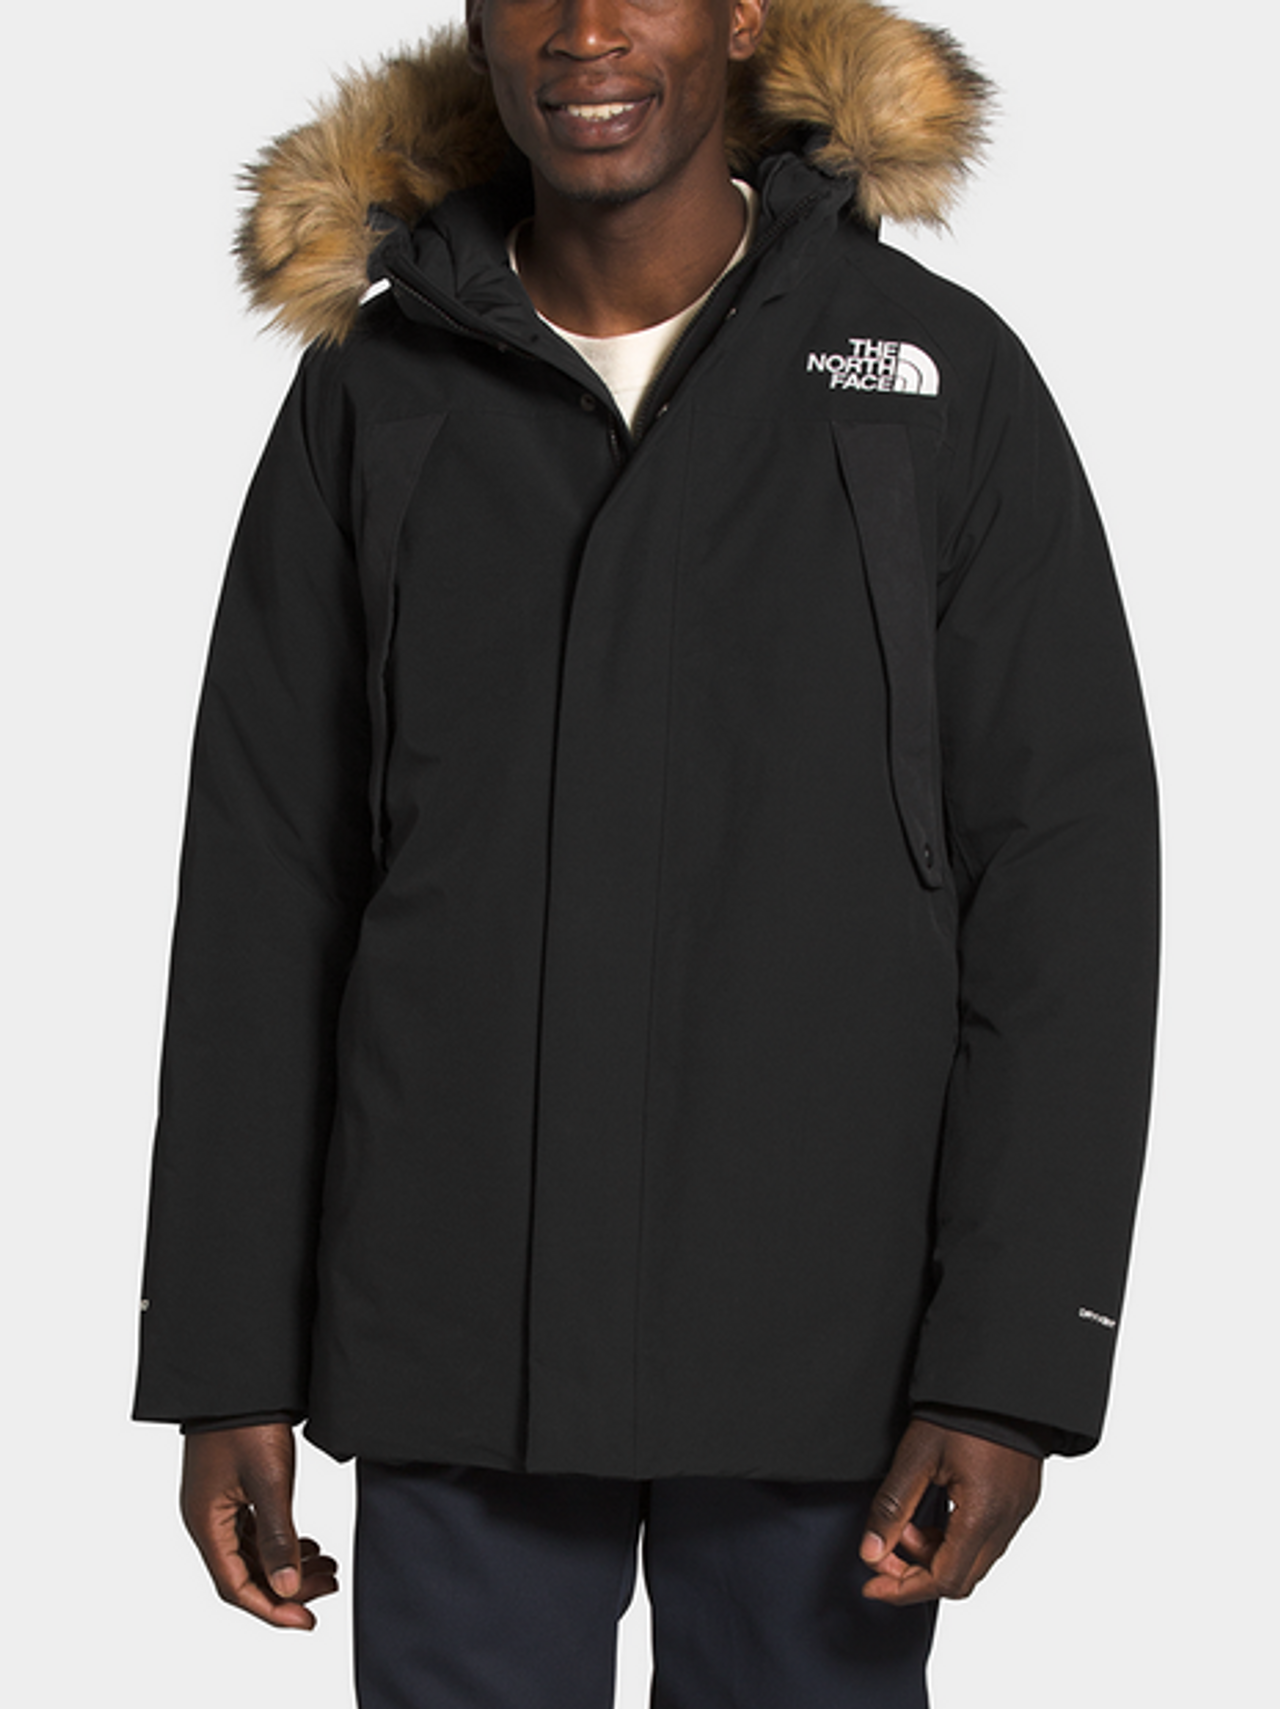 Shop The North Face Mens New Outerboroughs Jacket | Bivouac Ann Arbor